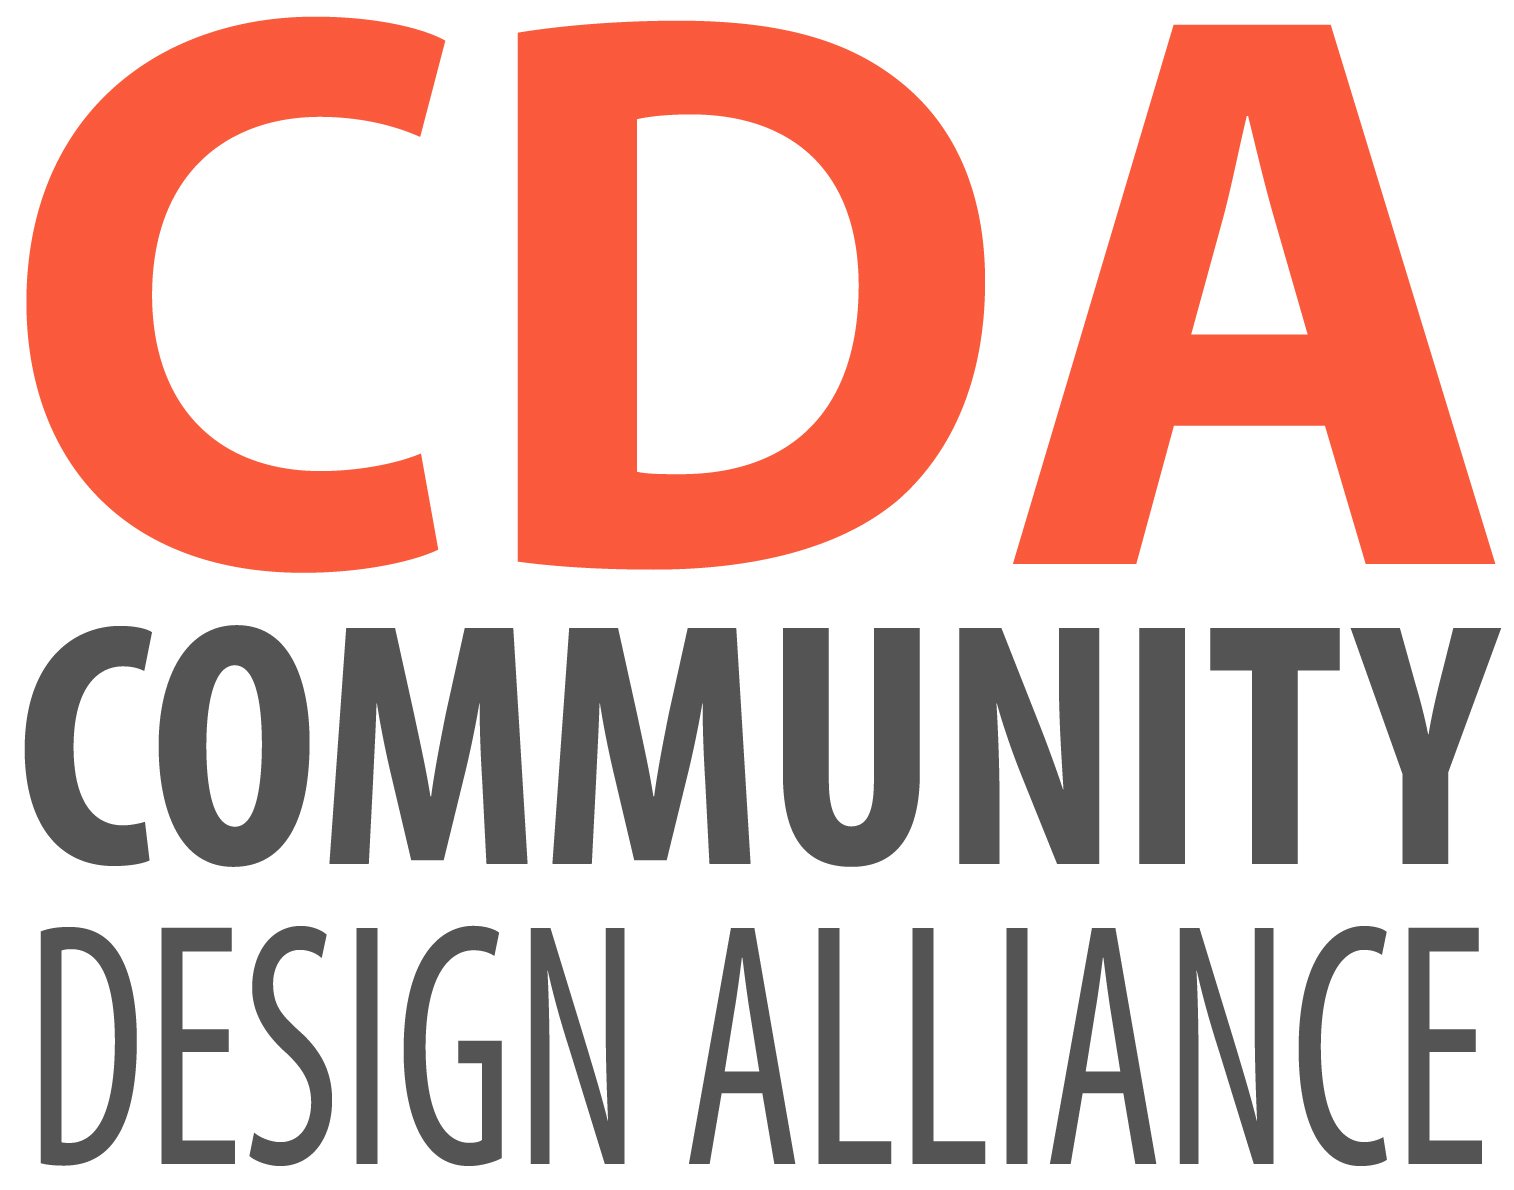 CDA logo large